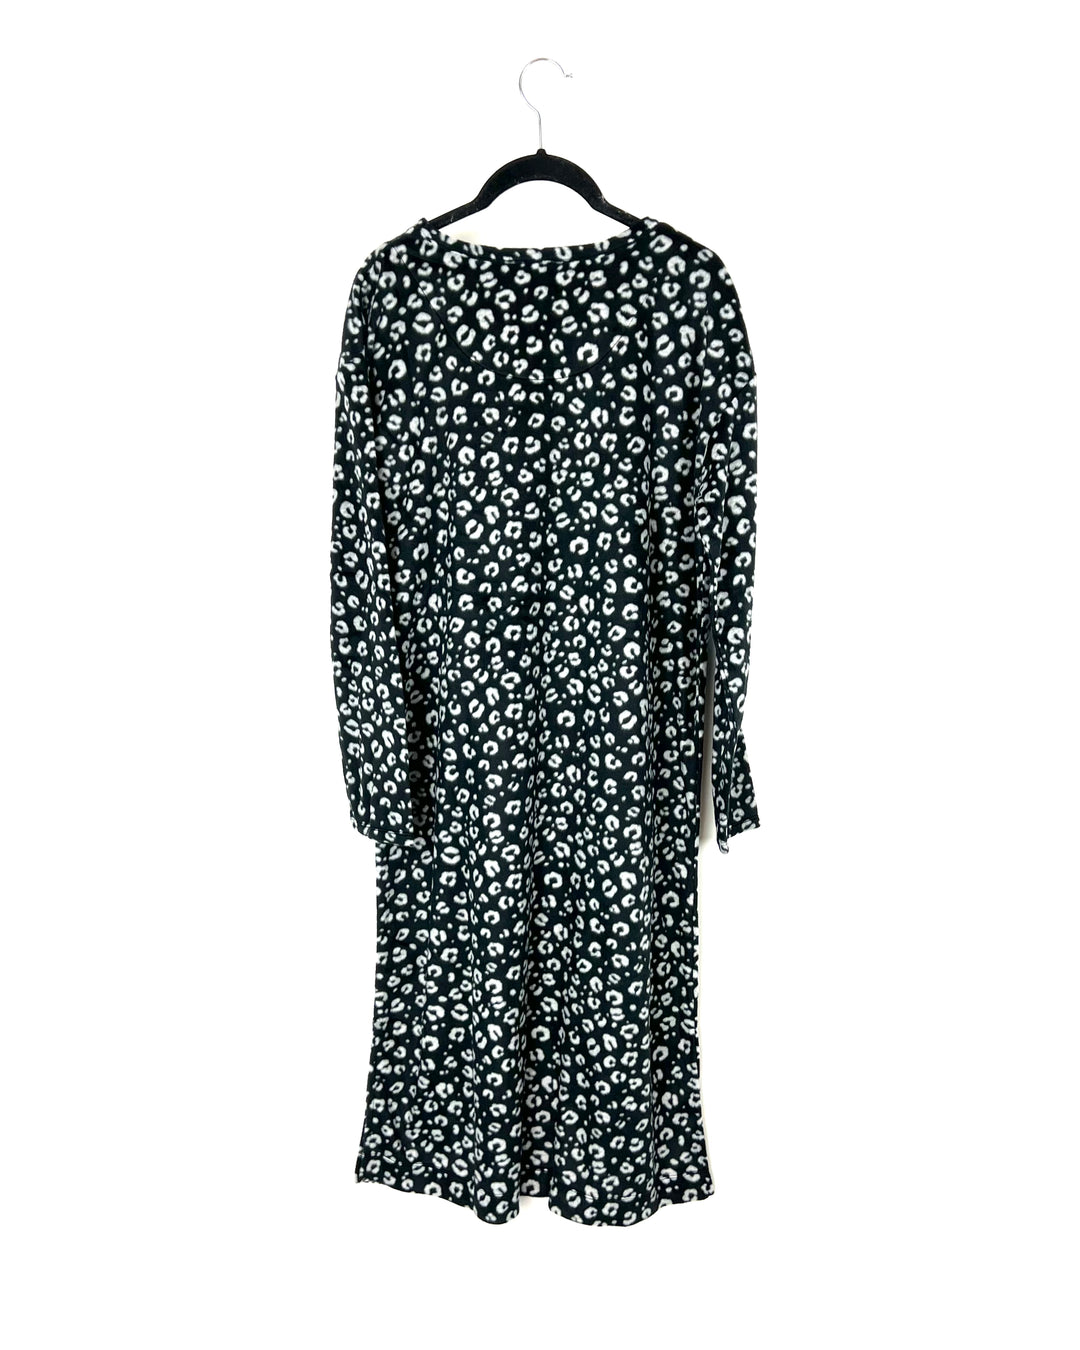 Black And Grey Cheetah Print Nightgown - Size 6/8